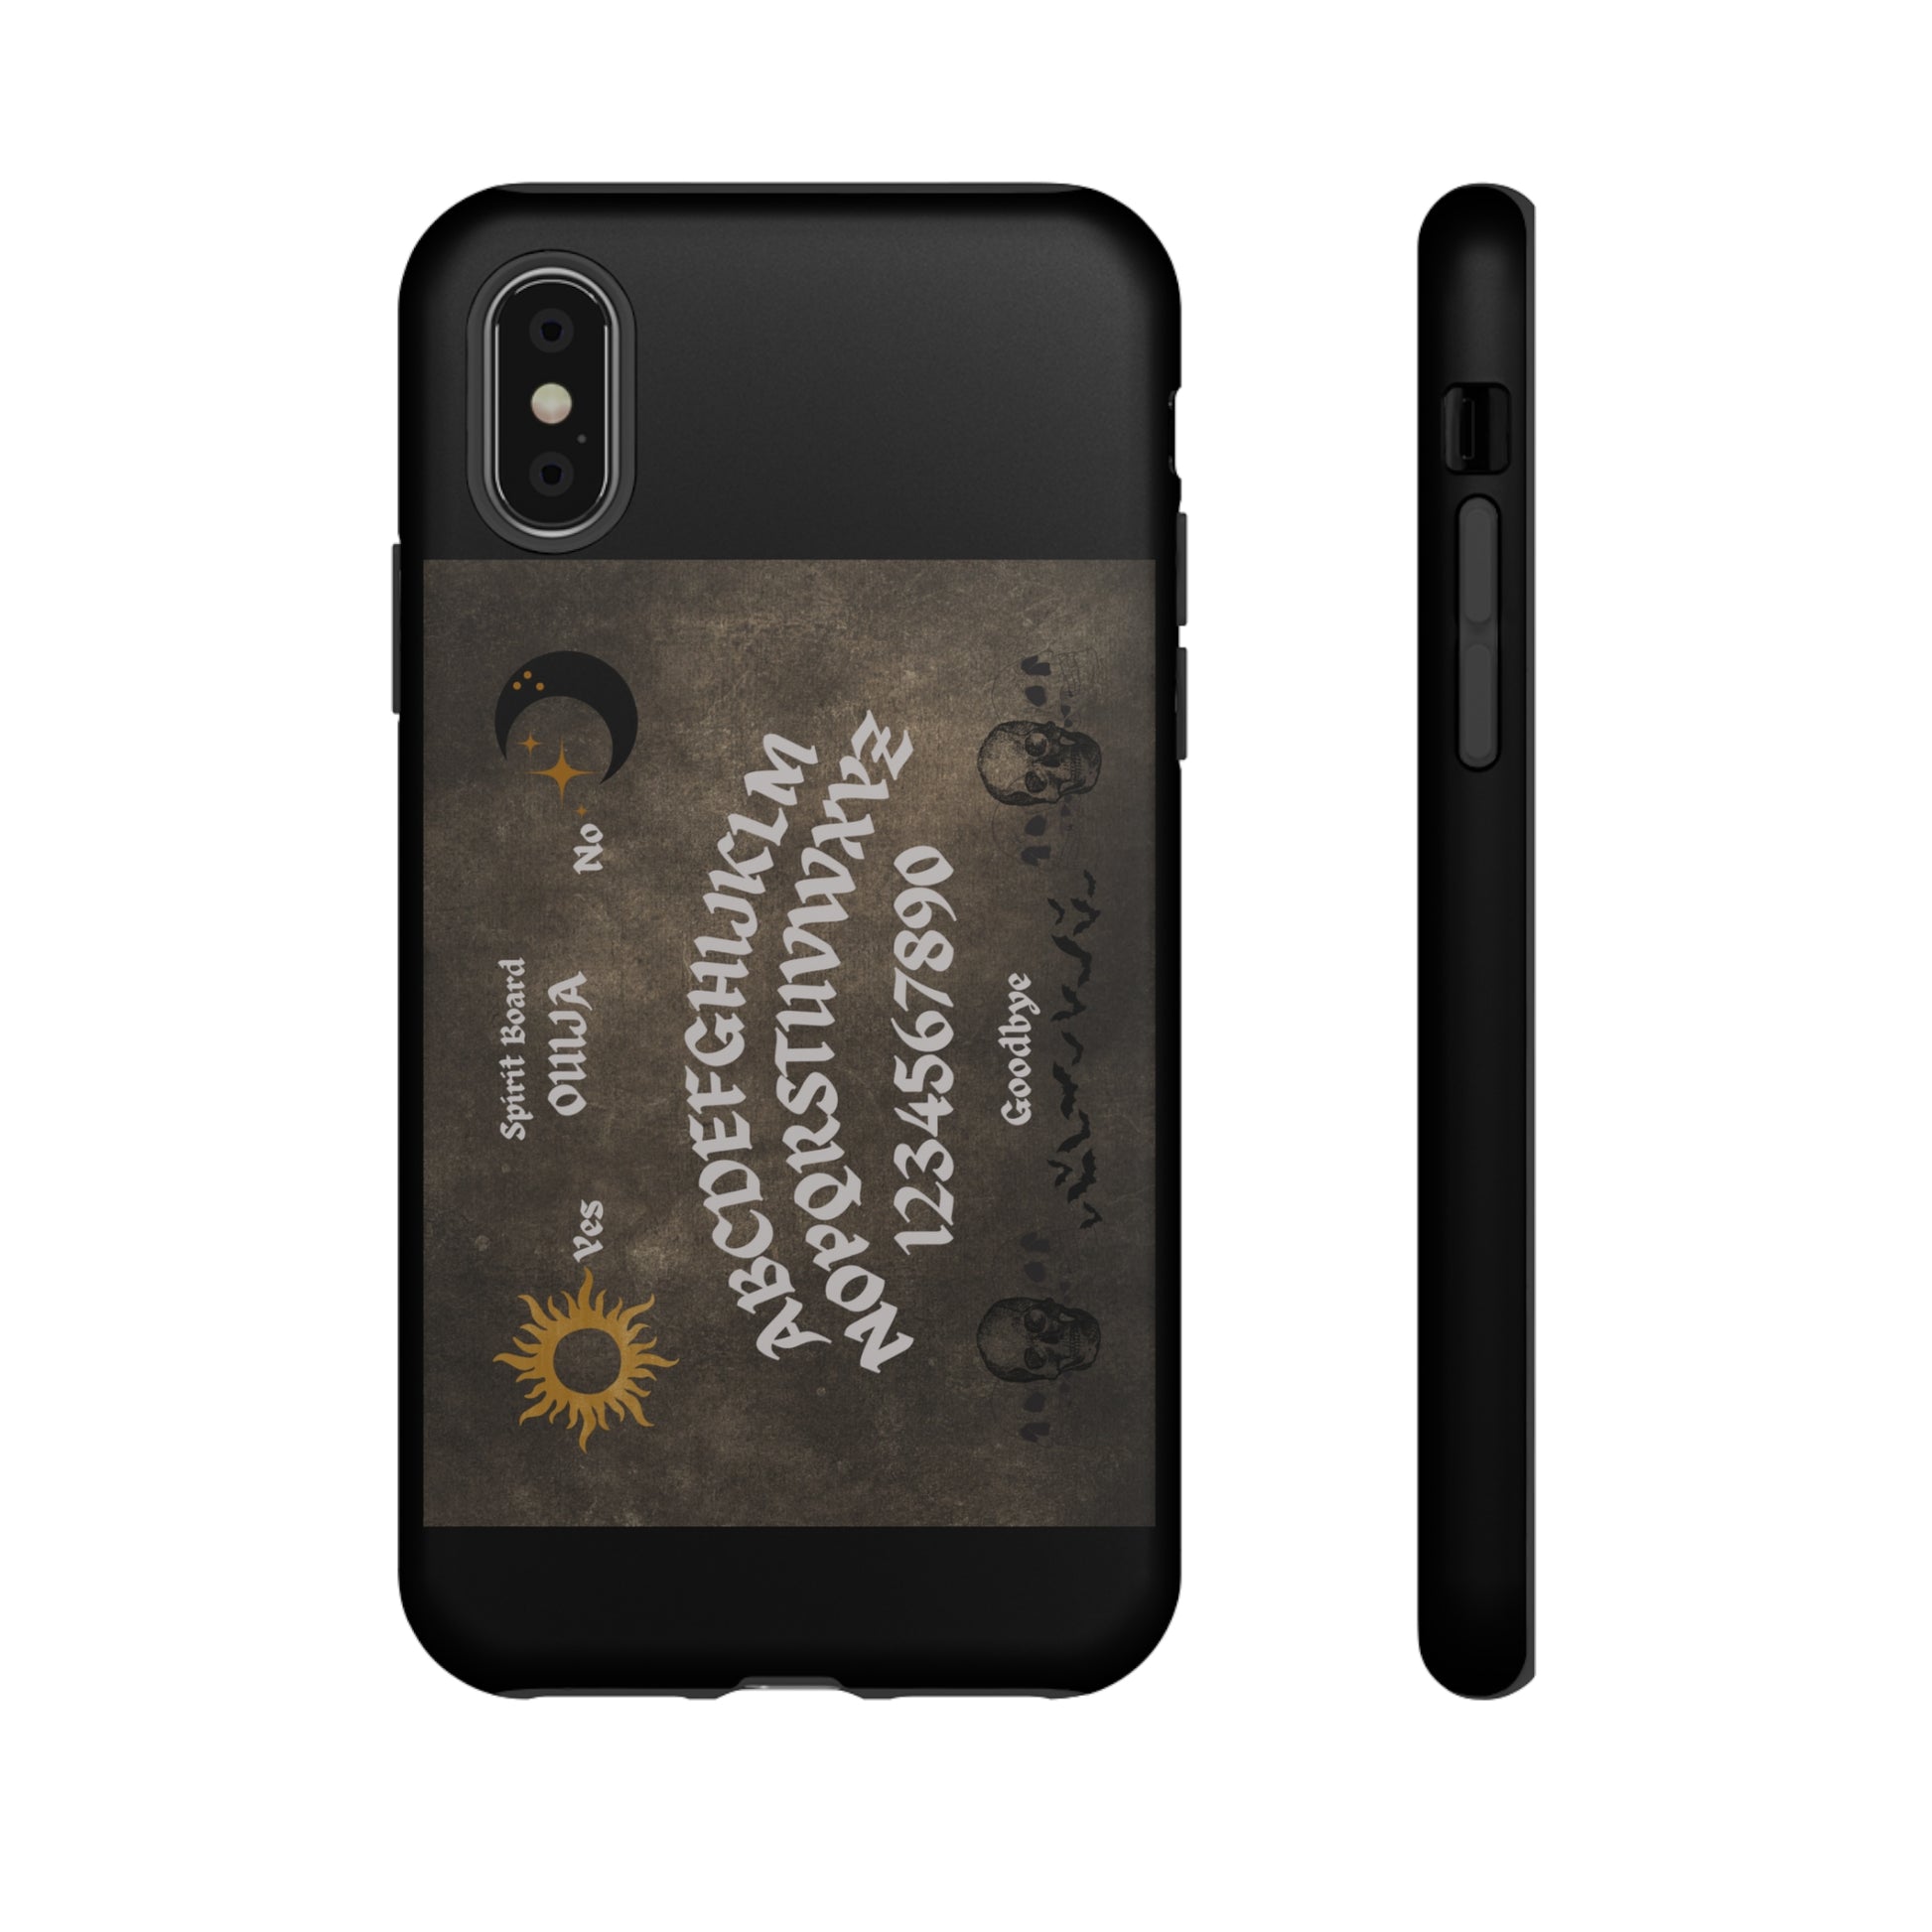 Spirit Ouija Board Tough Case for Samsung iPhone GooglePhone CaseVTZdesignsiPhone XSMatteAccessoriesboardGlossy